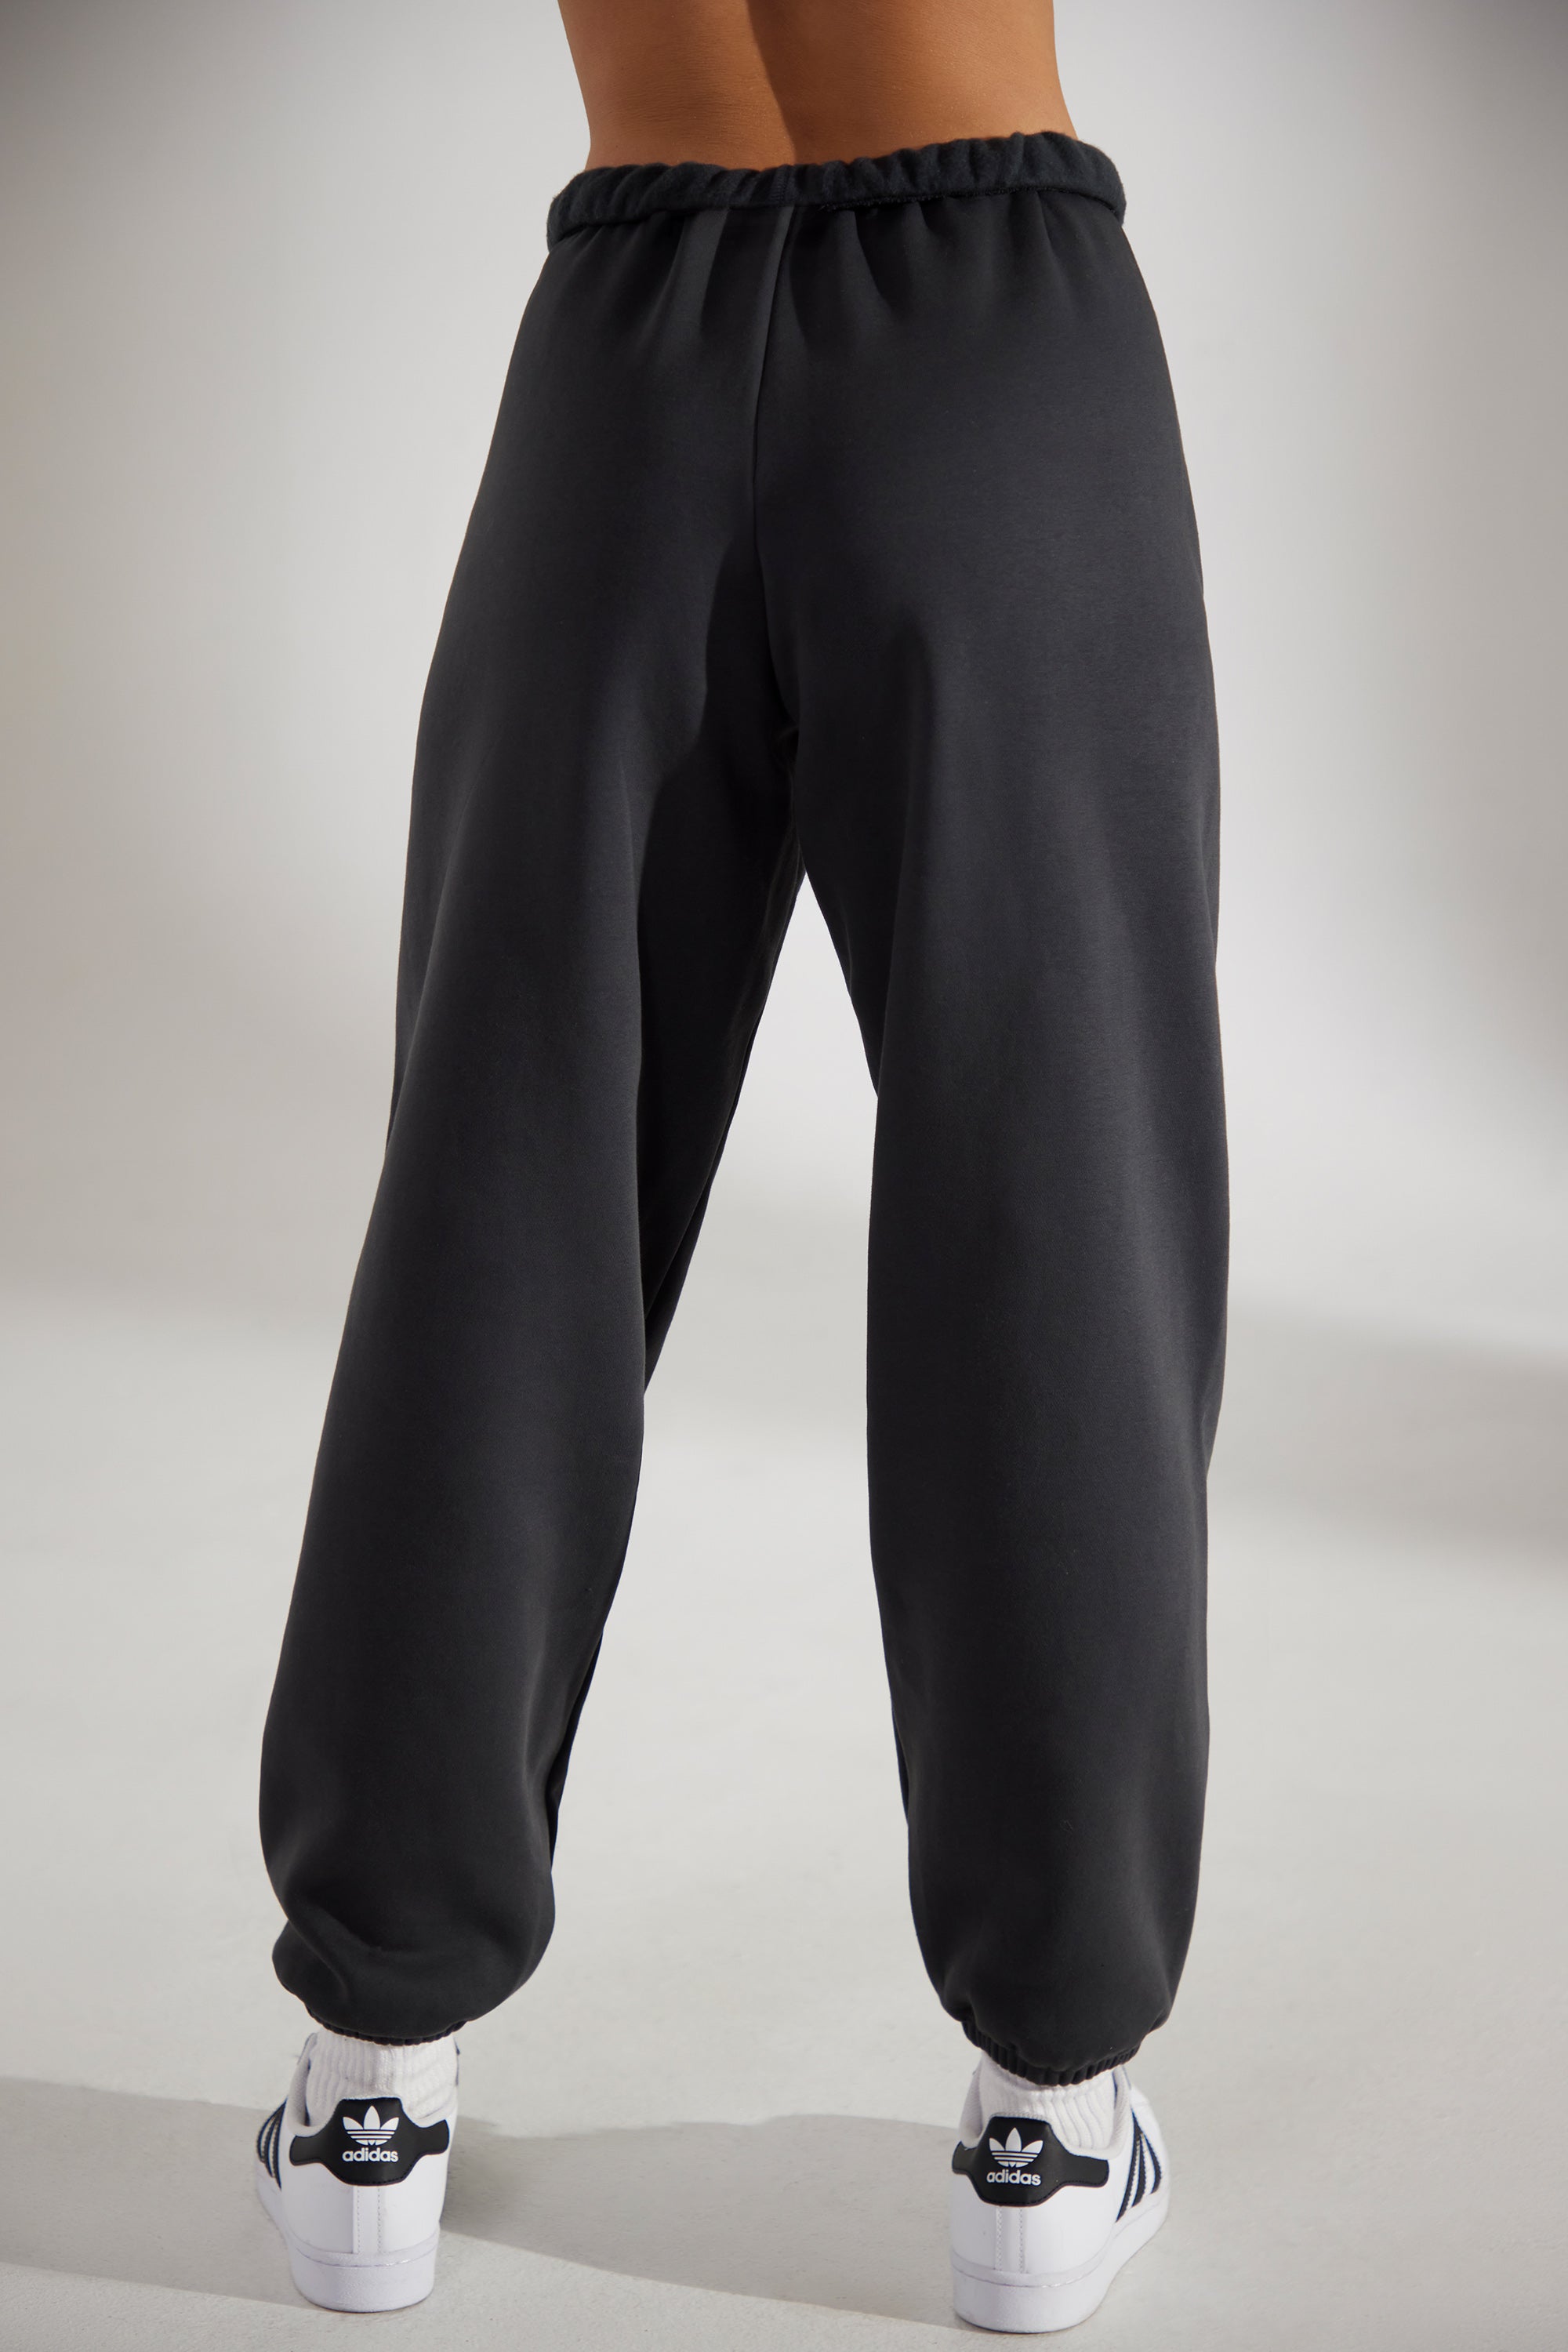 Generic (Black)Oversized Sweatpants Joggers Men Baggy Cotton